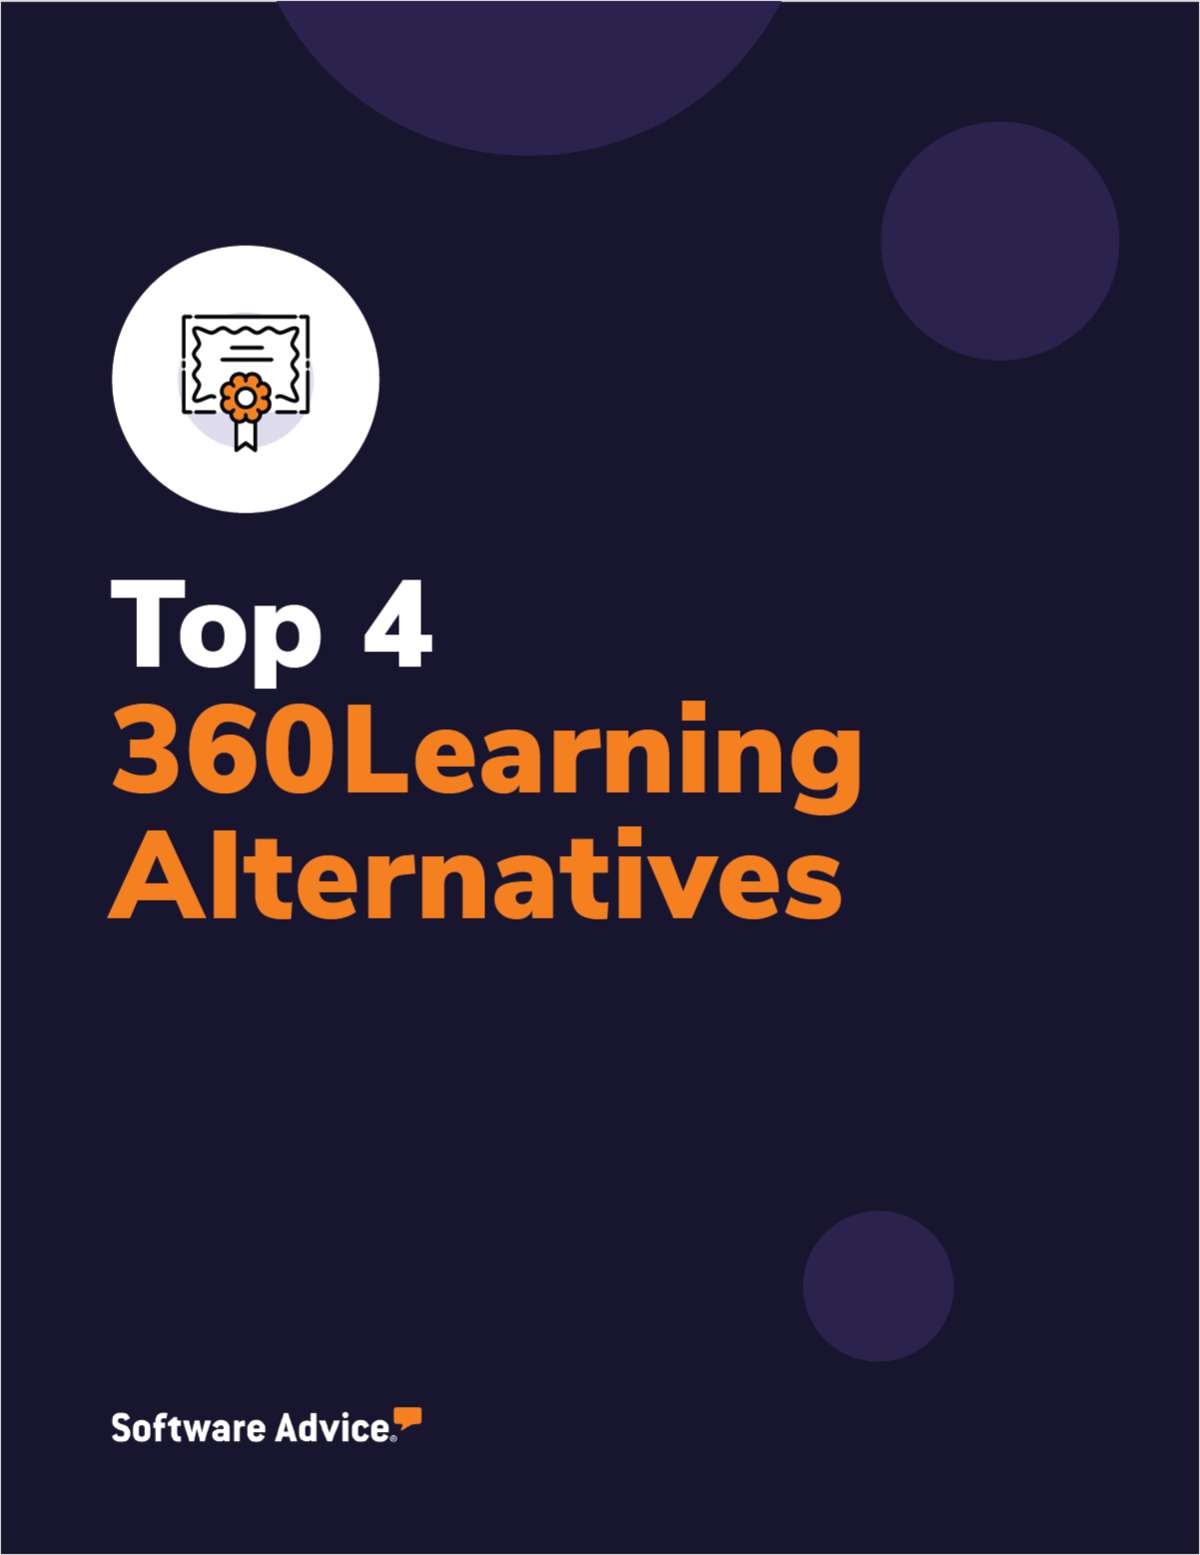 Top 4 360Learning Alternatives